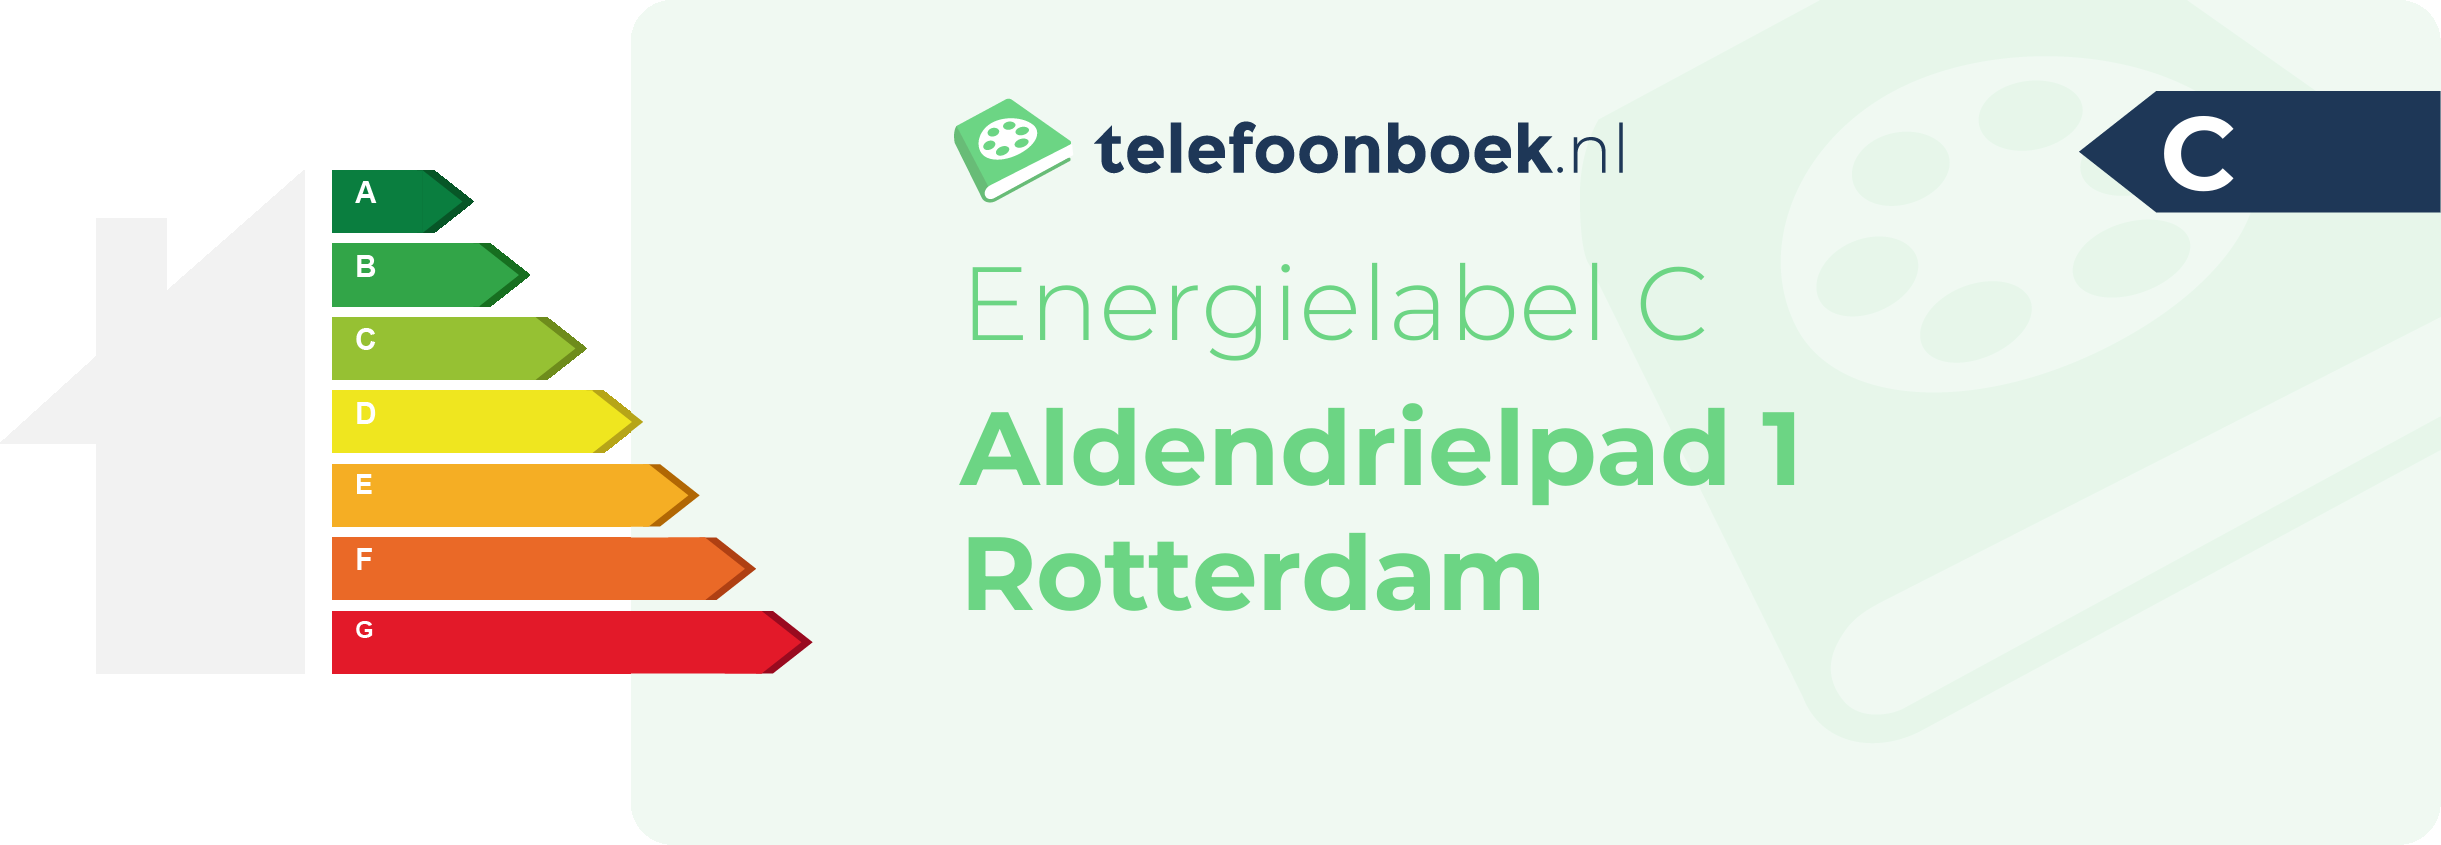 Energielabel Aldendrielpad 1 Rotterdam